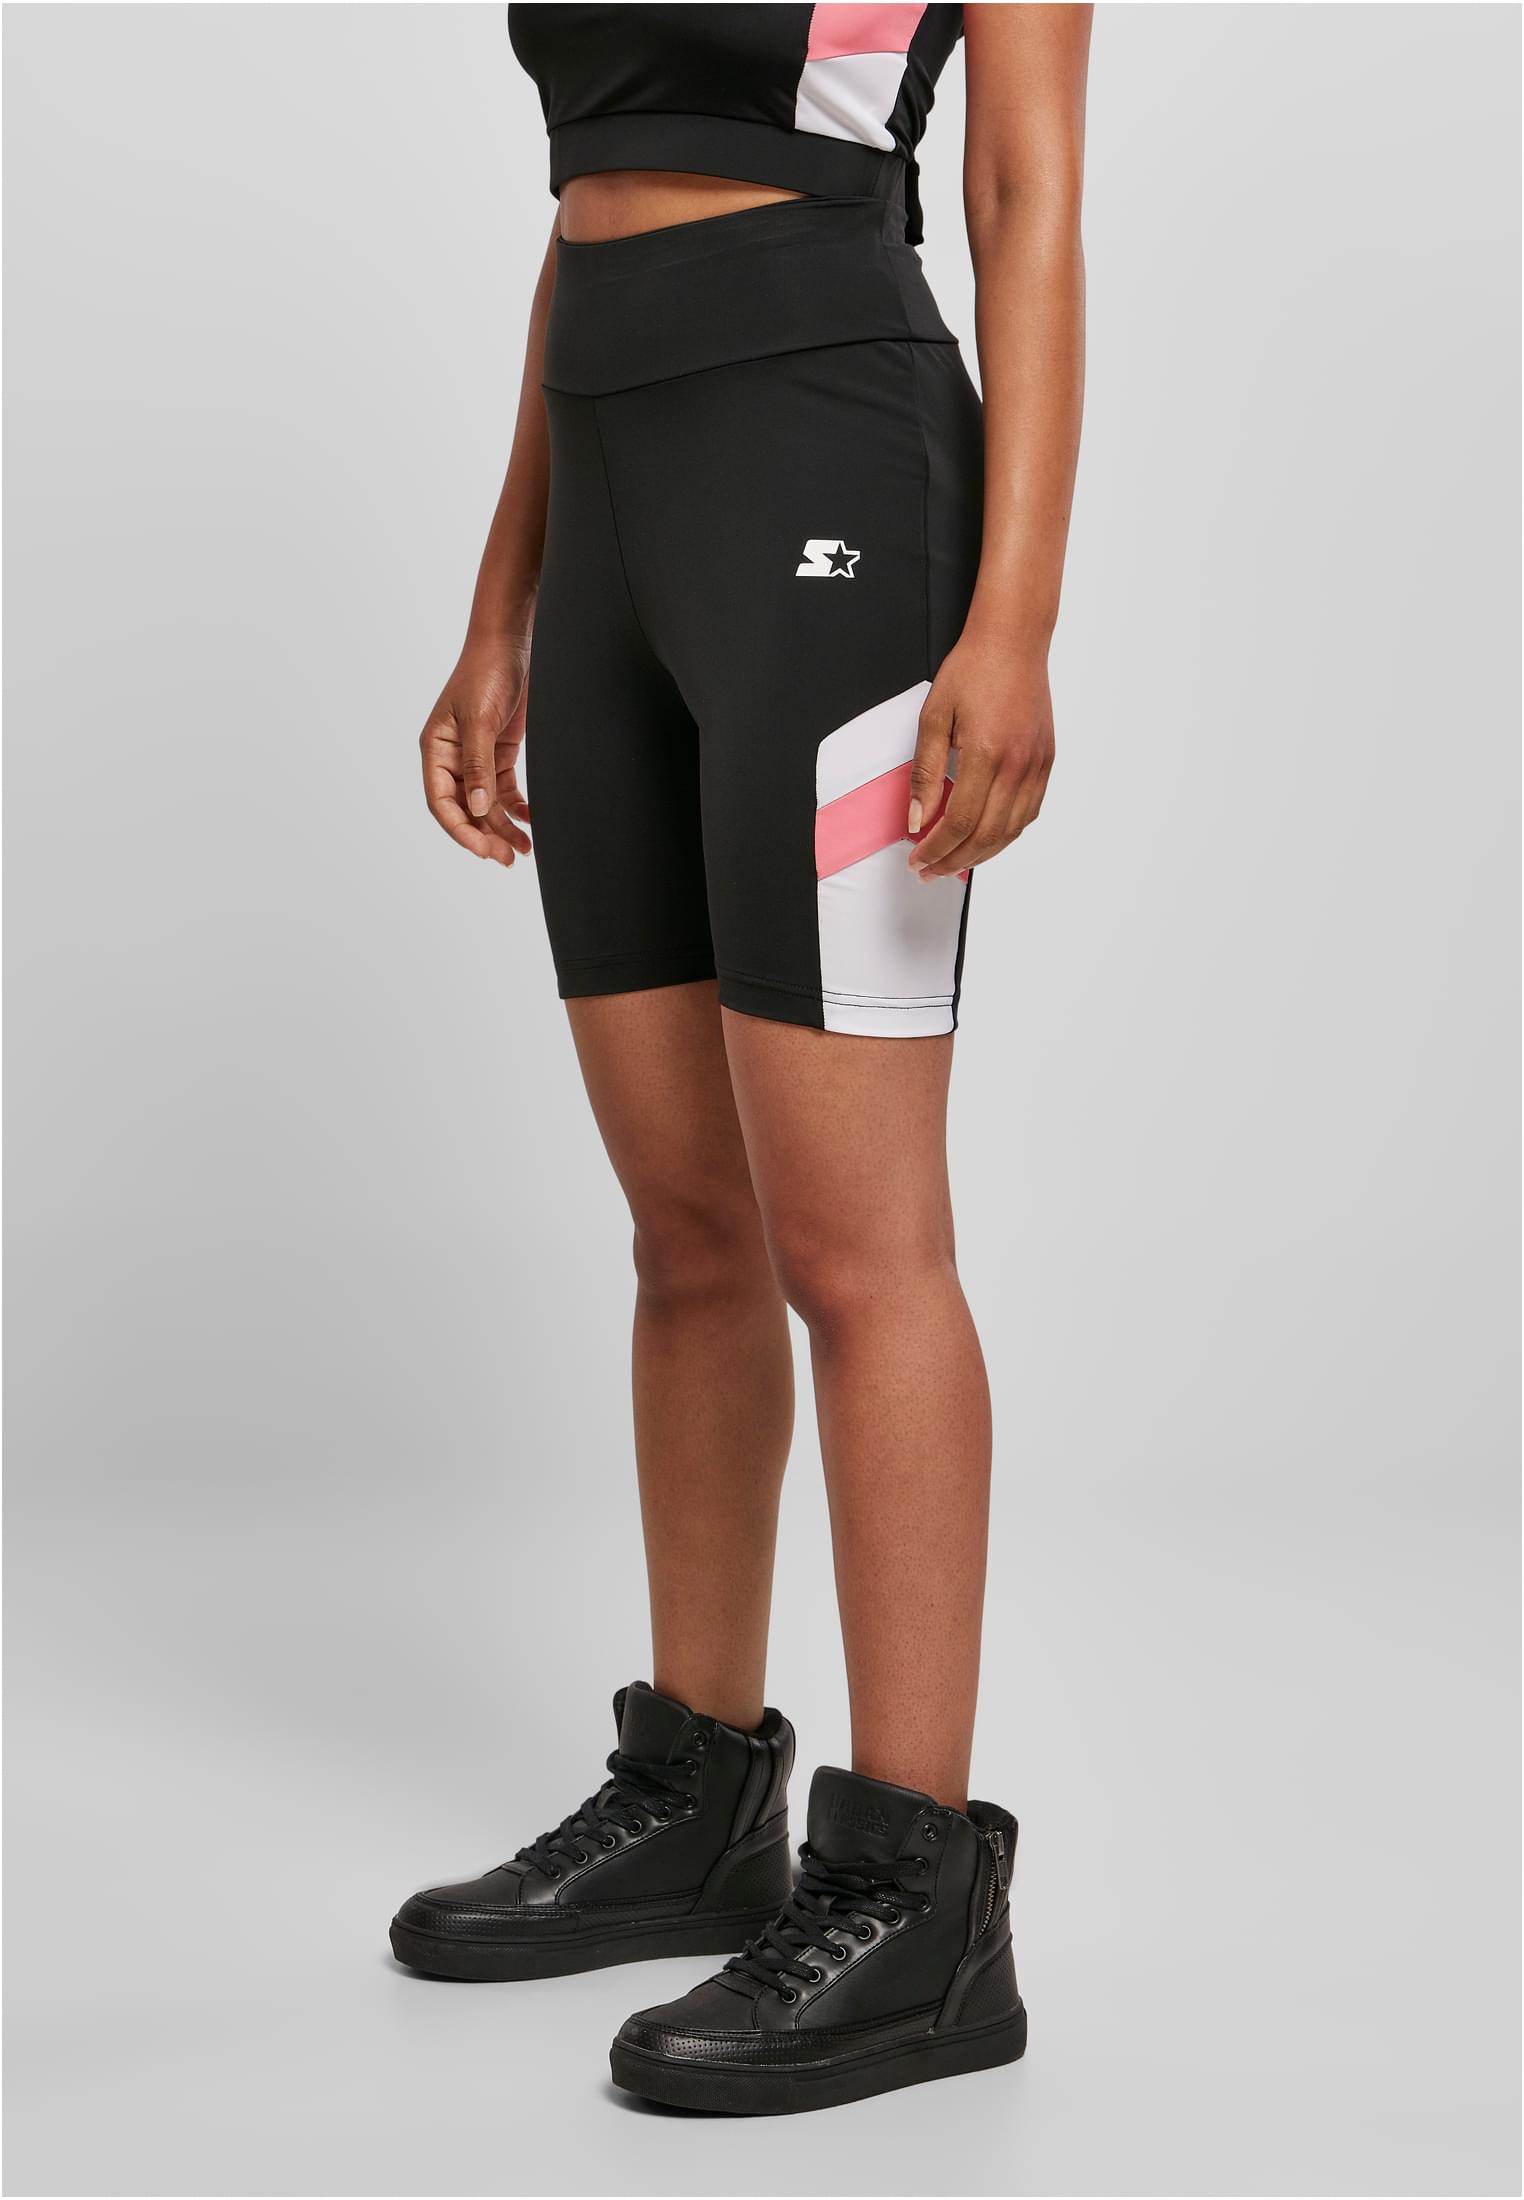 Women's Starter Cycle Shorts Black/White